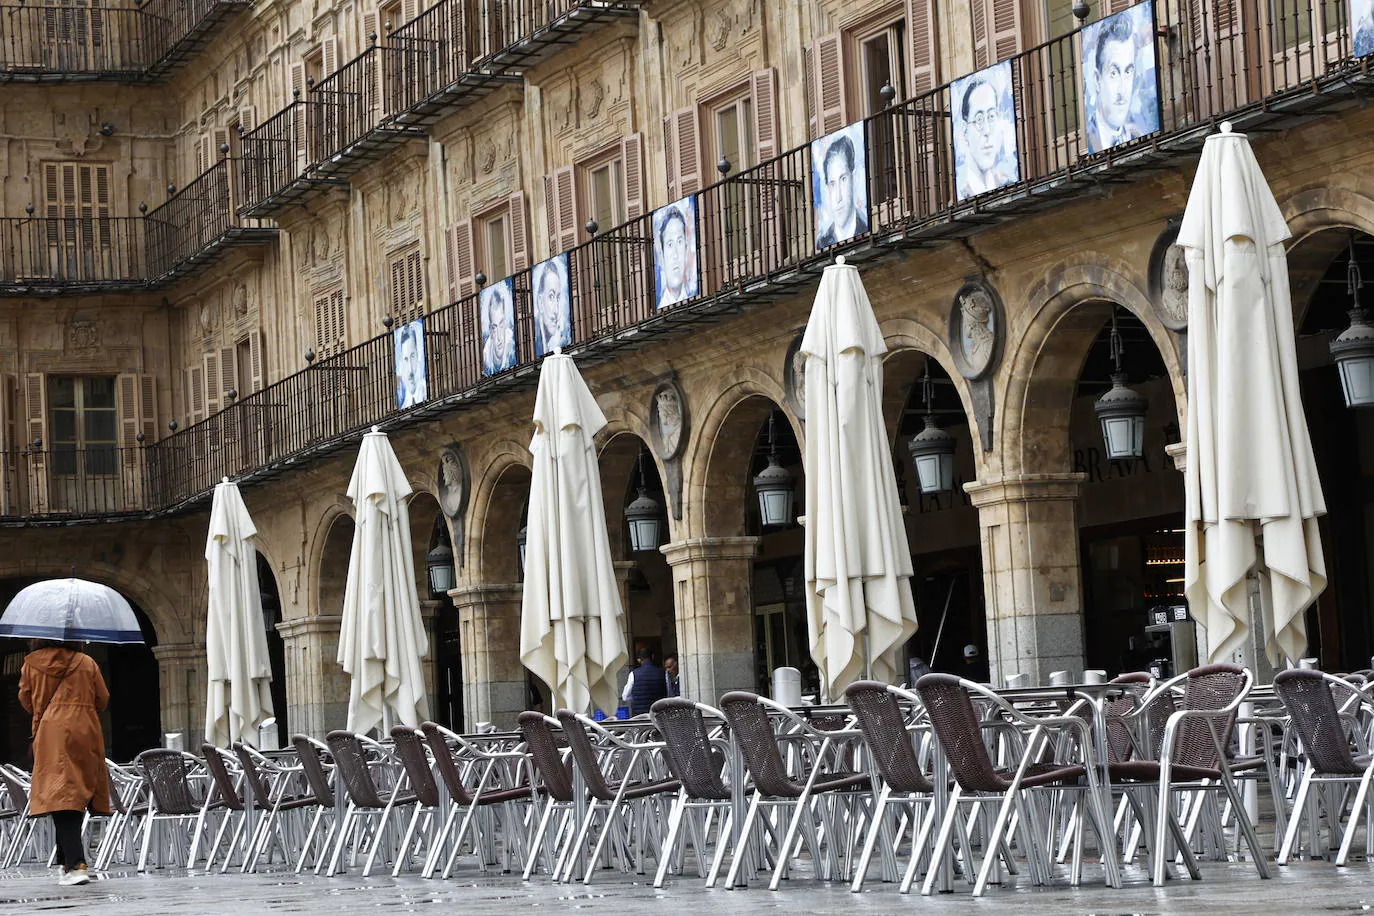 El “espíritu de Mogarraz” ya homenajea a Lorca en la Plaza Mayor